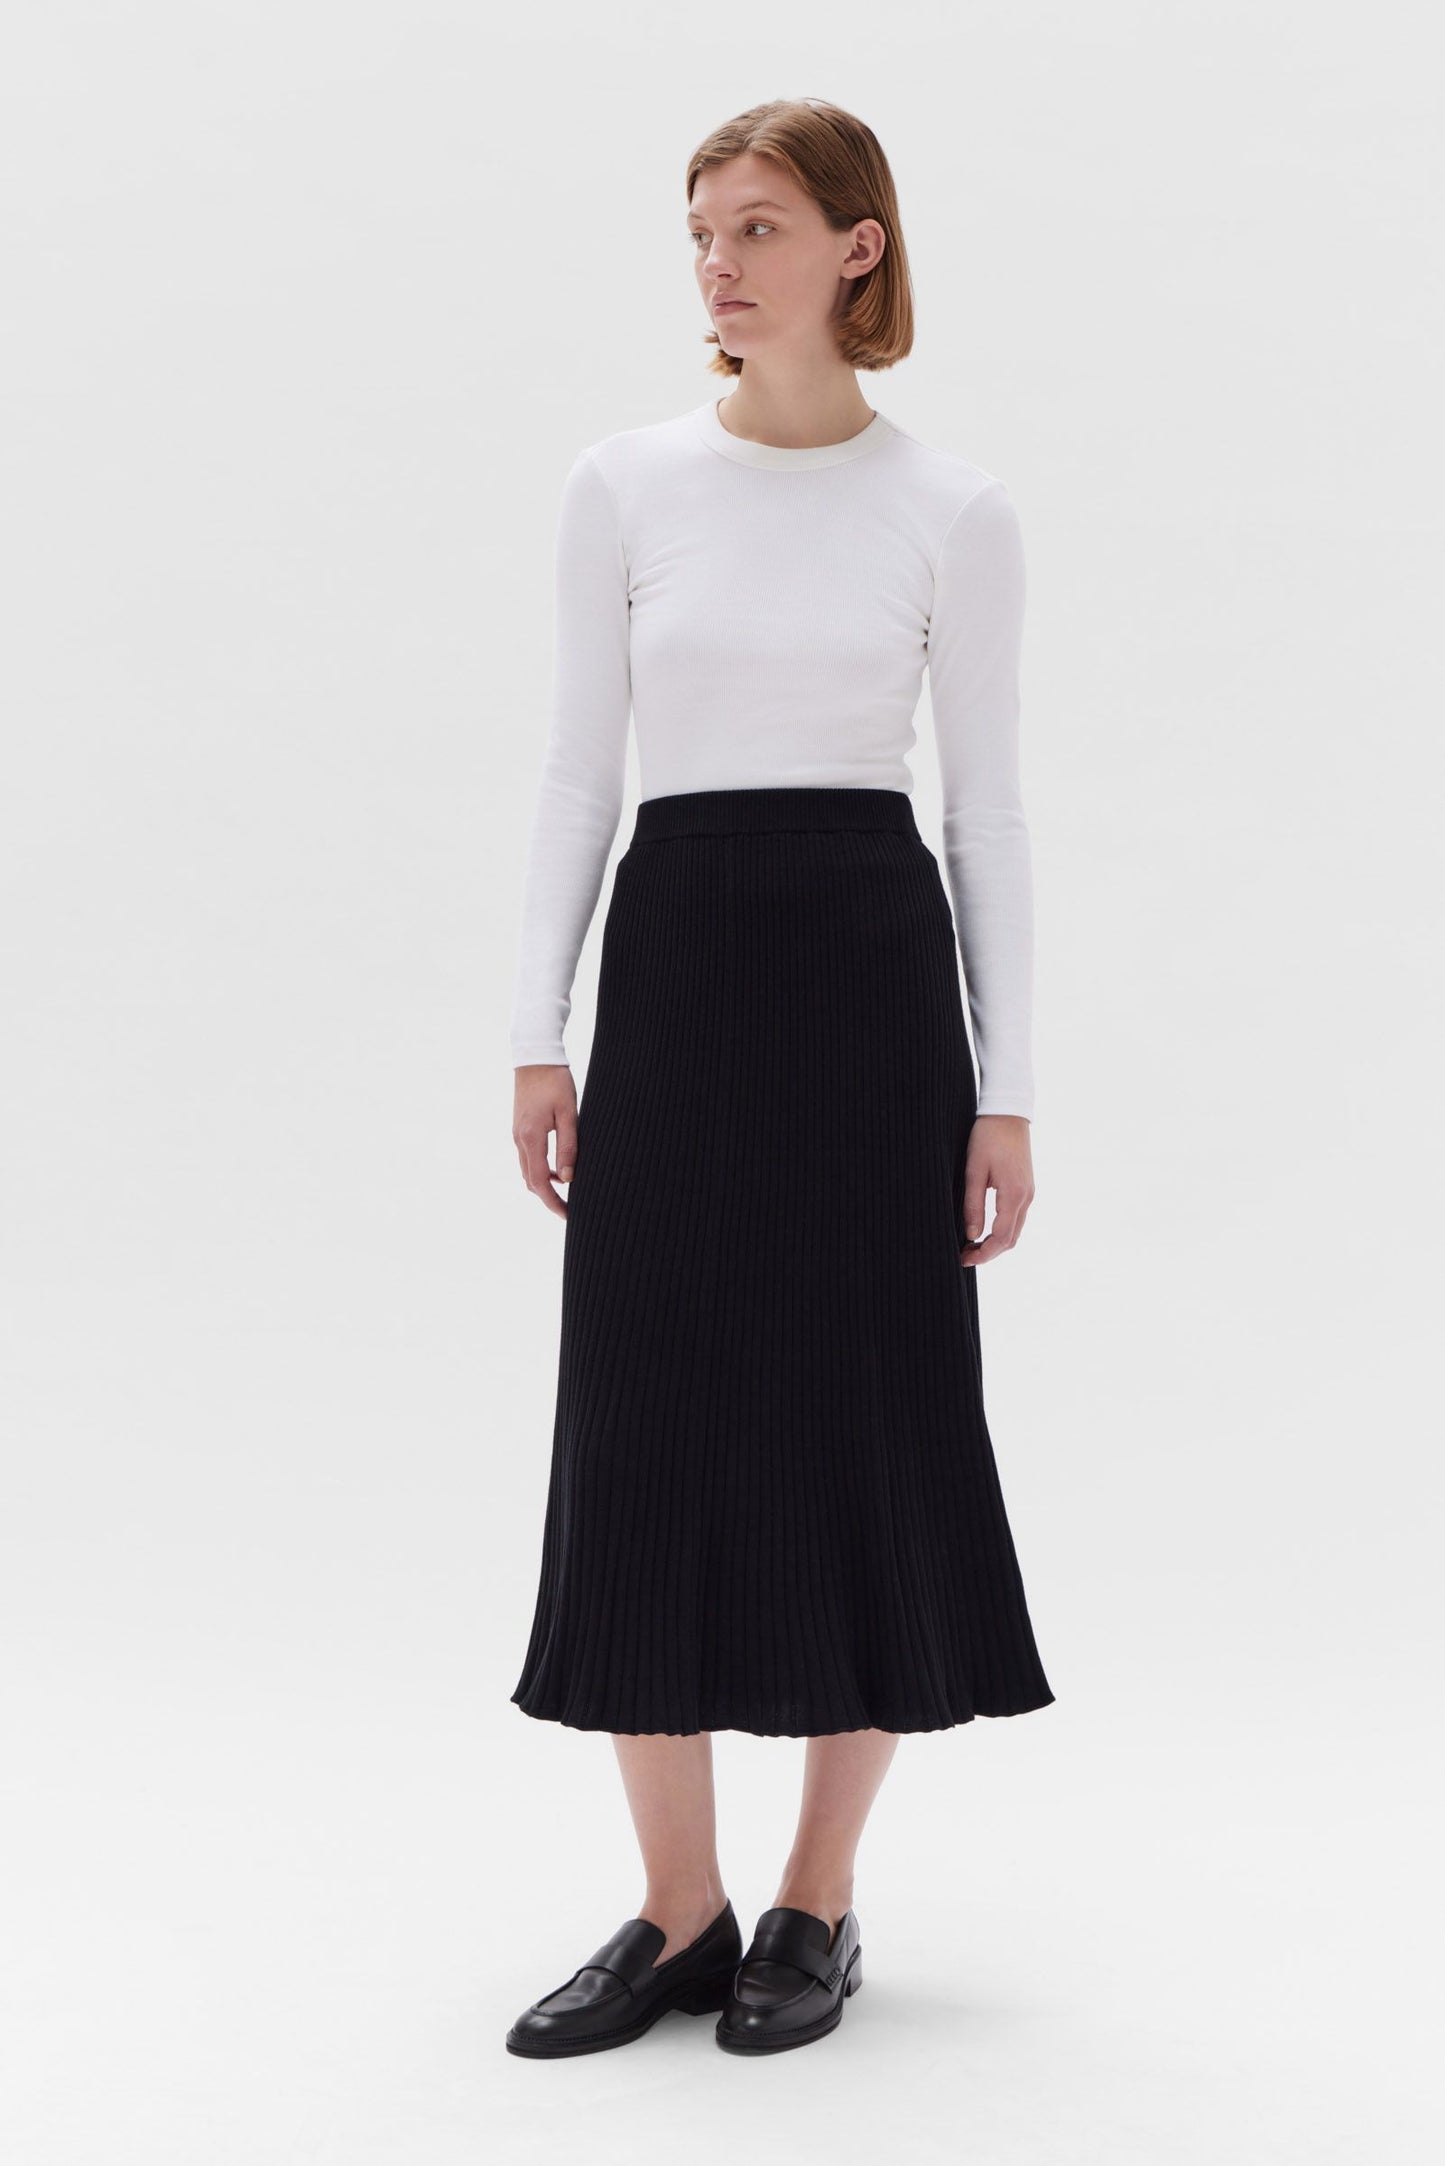 Freya Knit Skirt - Black